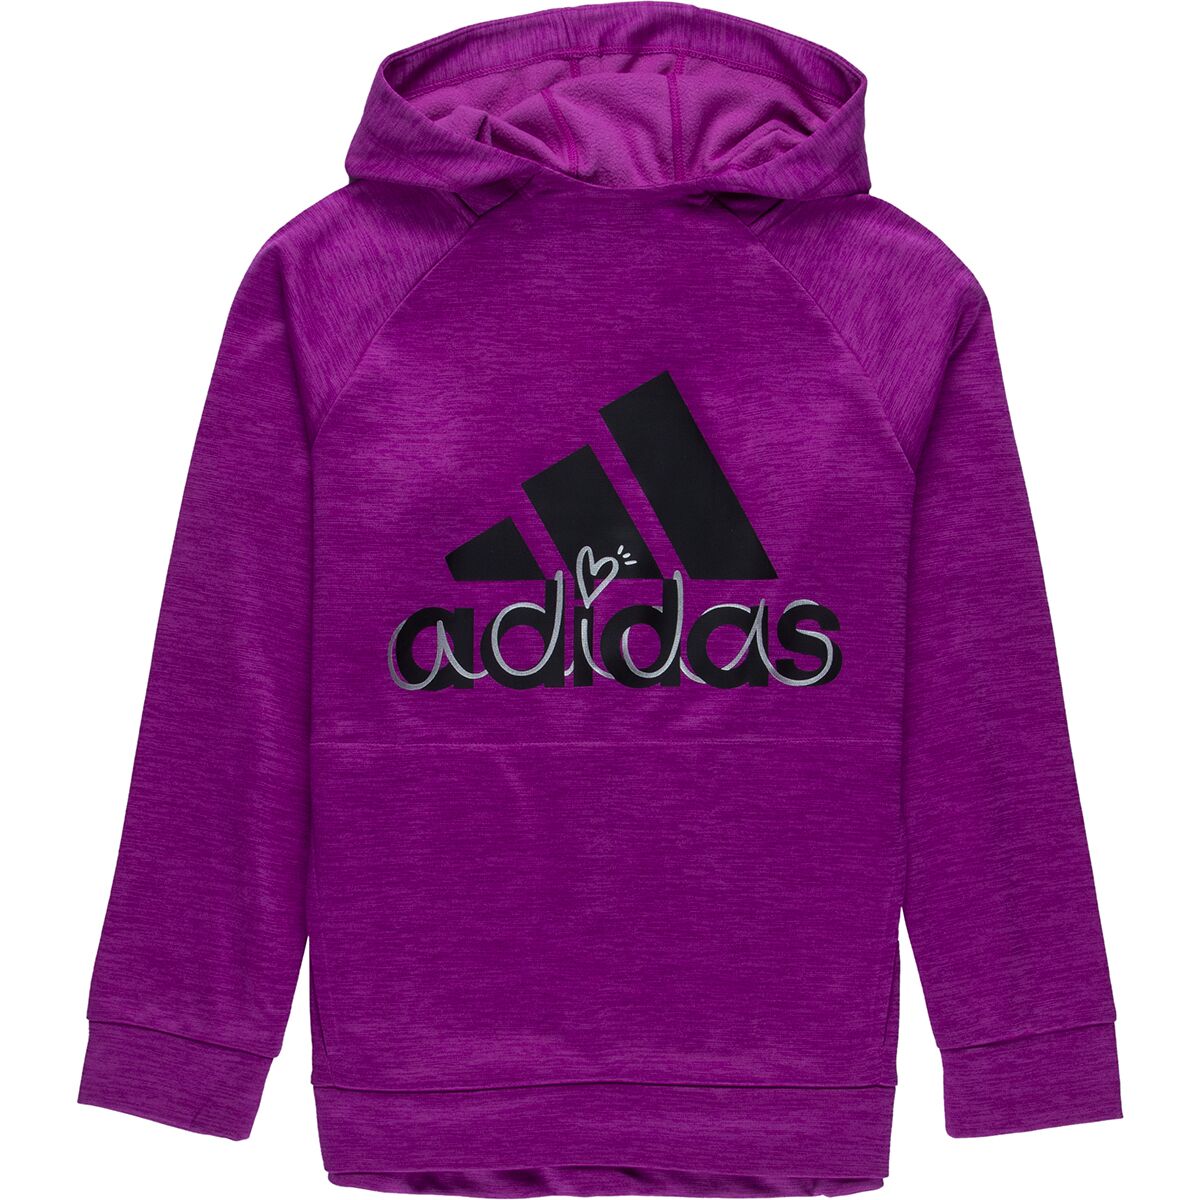 Adidas Event21 Melange Hooded Pullover - Girls'